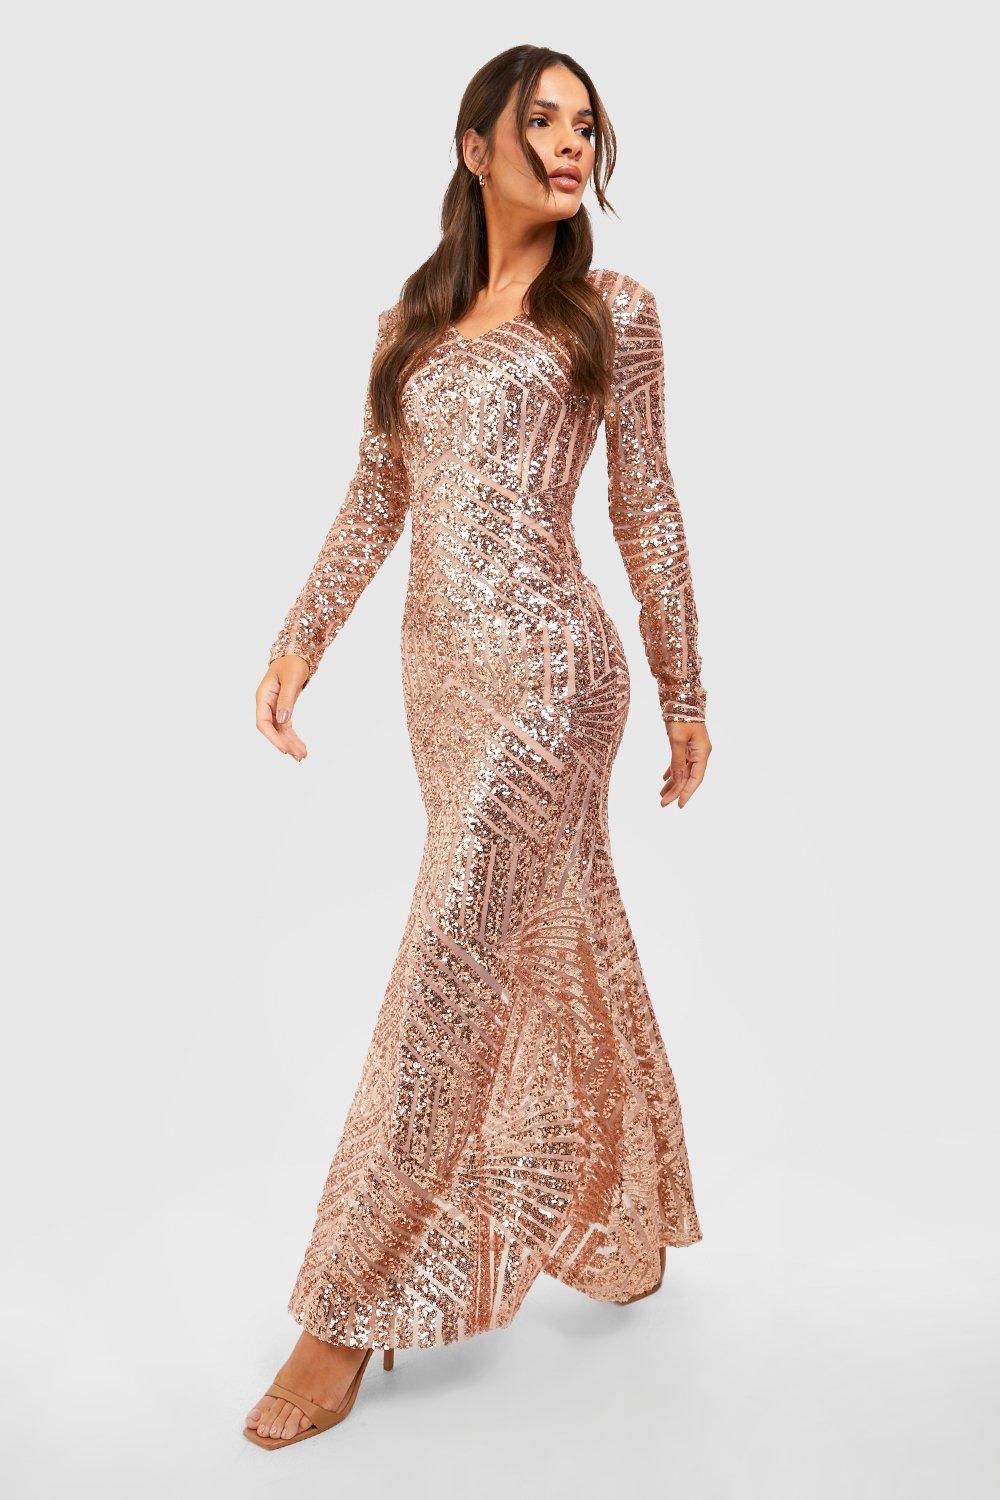 Sequin Dresses | Glitter ☀ Sparkly ...